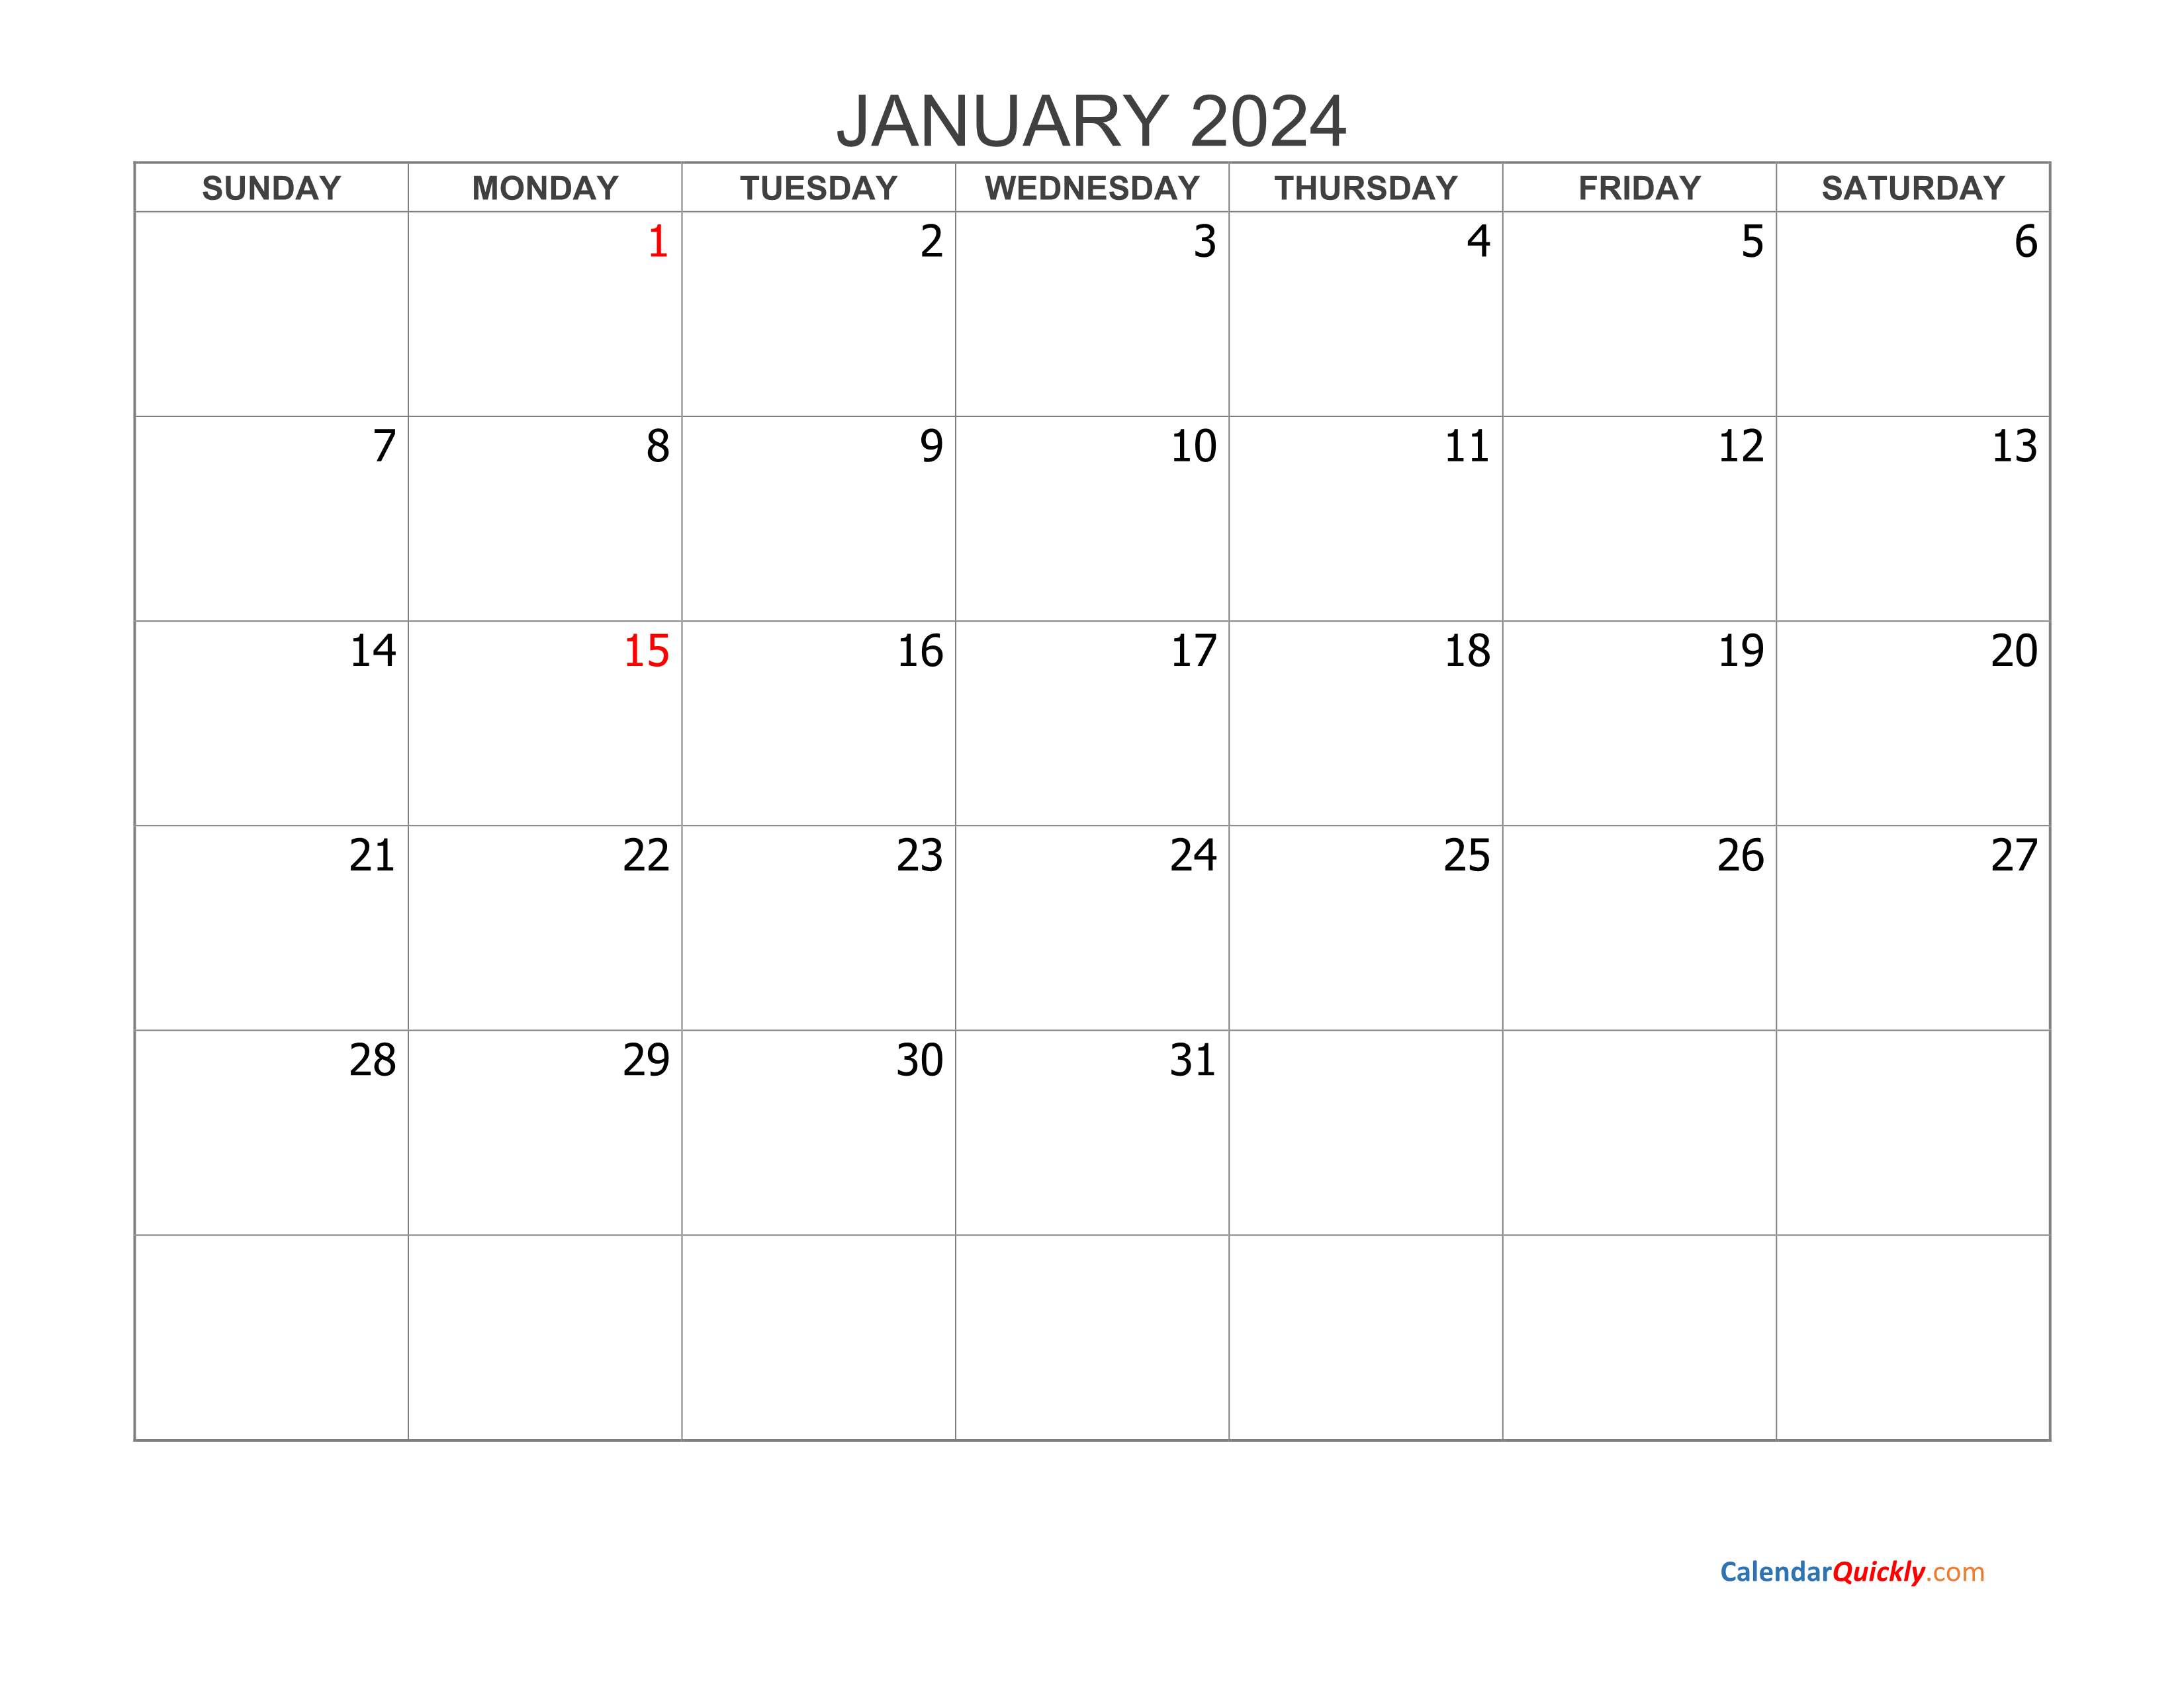 January 2024 Blank Calendar Calendar Quickly